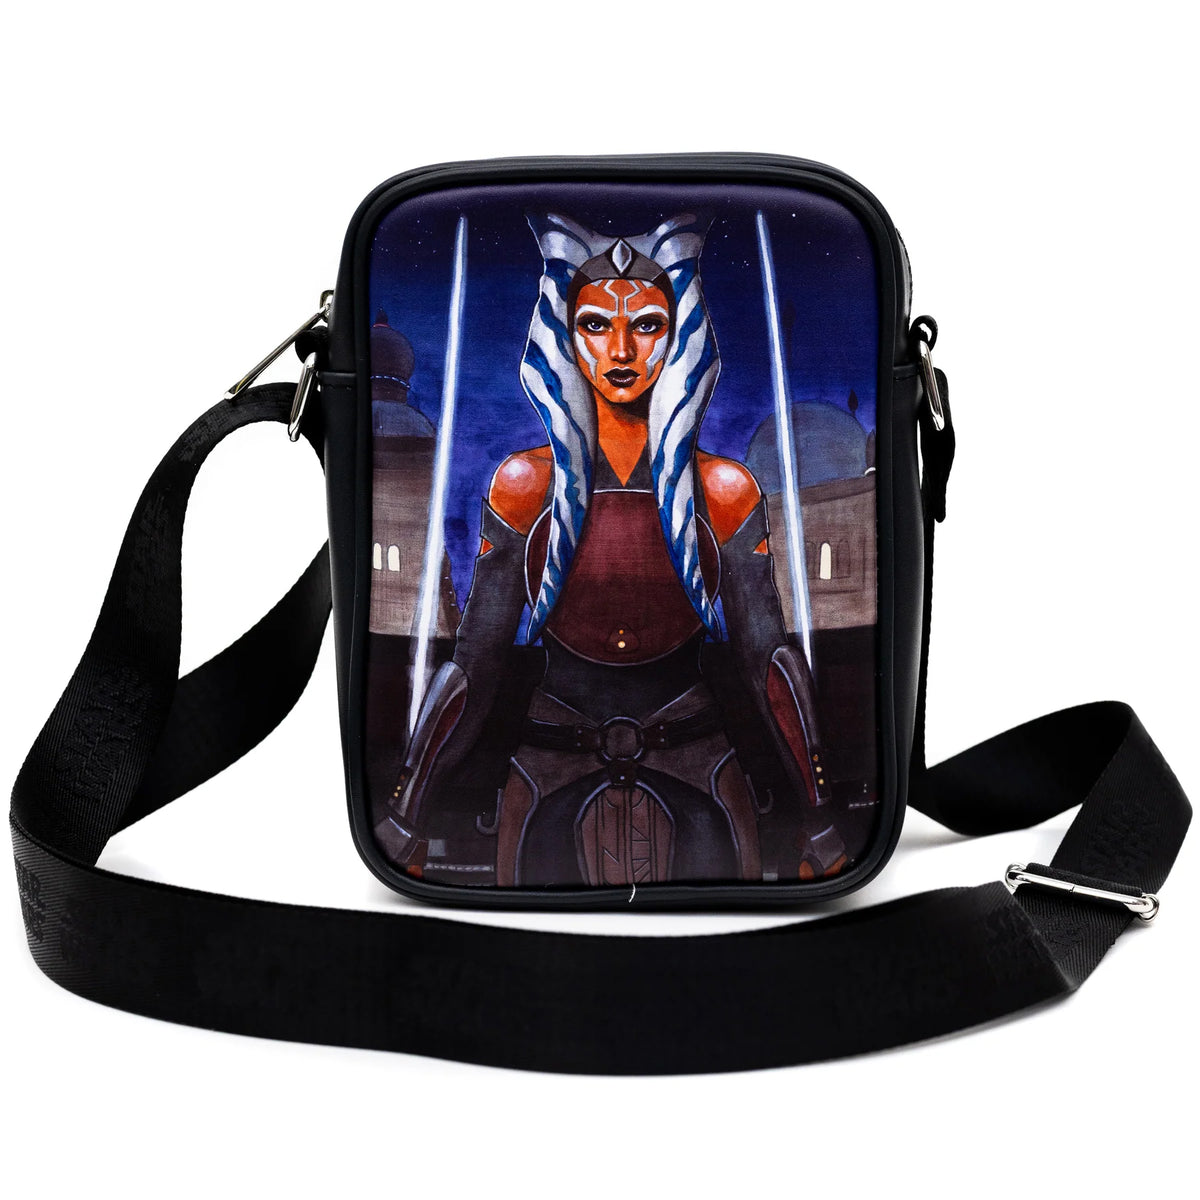 Star Wars Ahsoka Tano Crossbody Bag